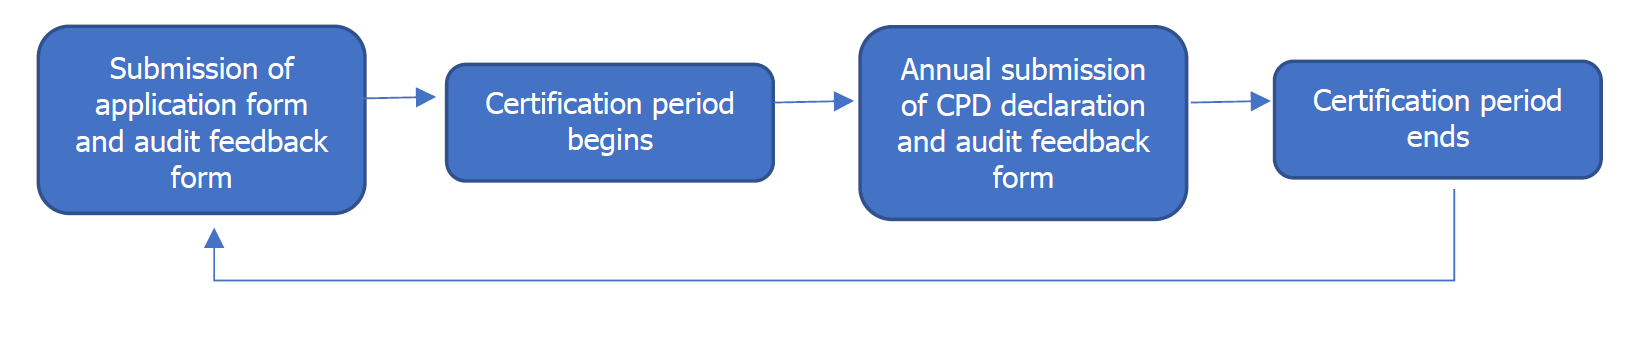 auditor qualification renewal process